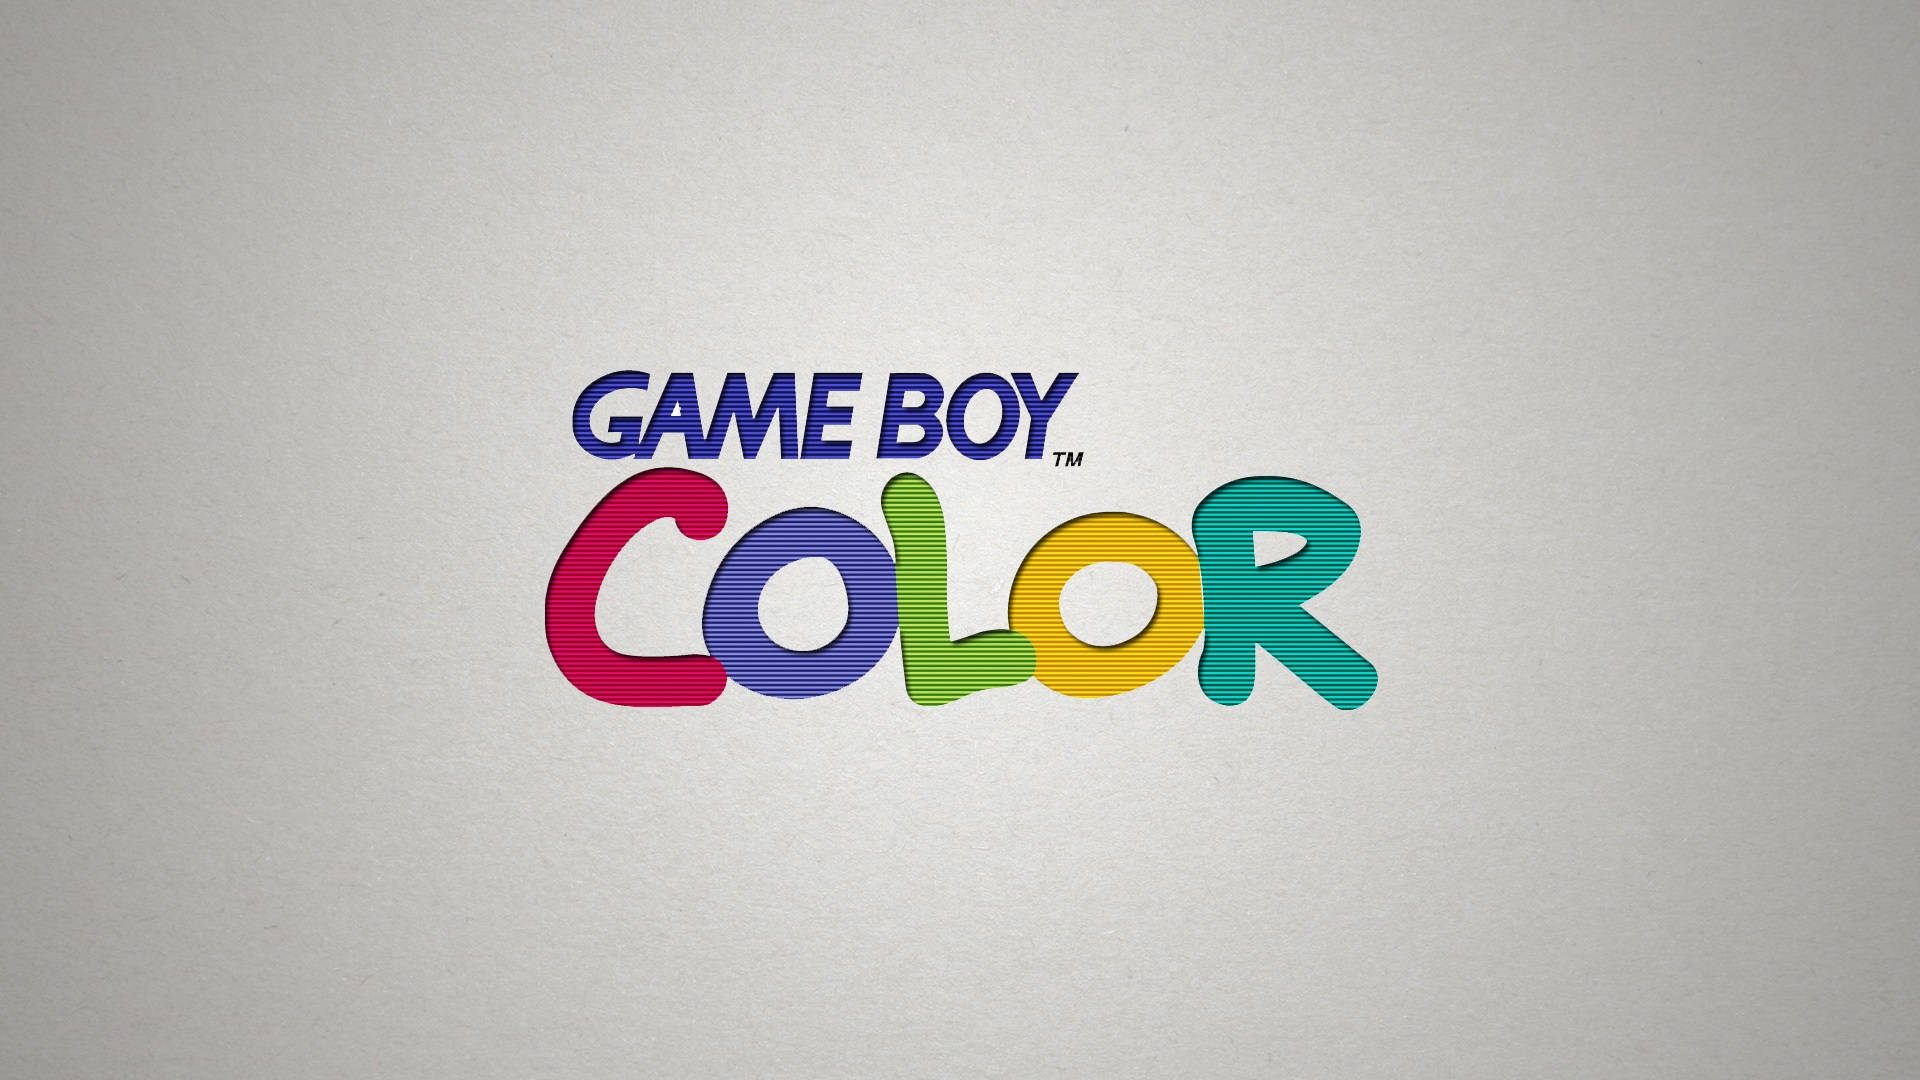 Gameboy Color-logo Wallpaper